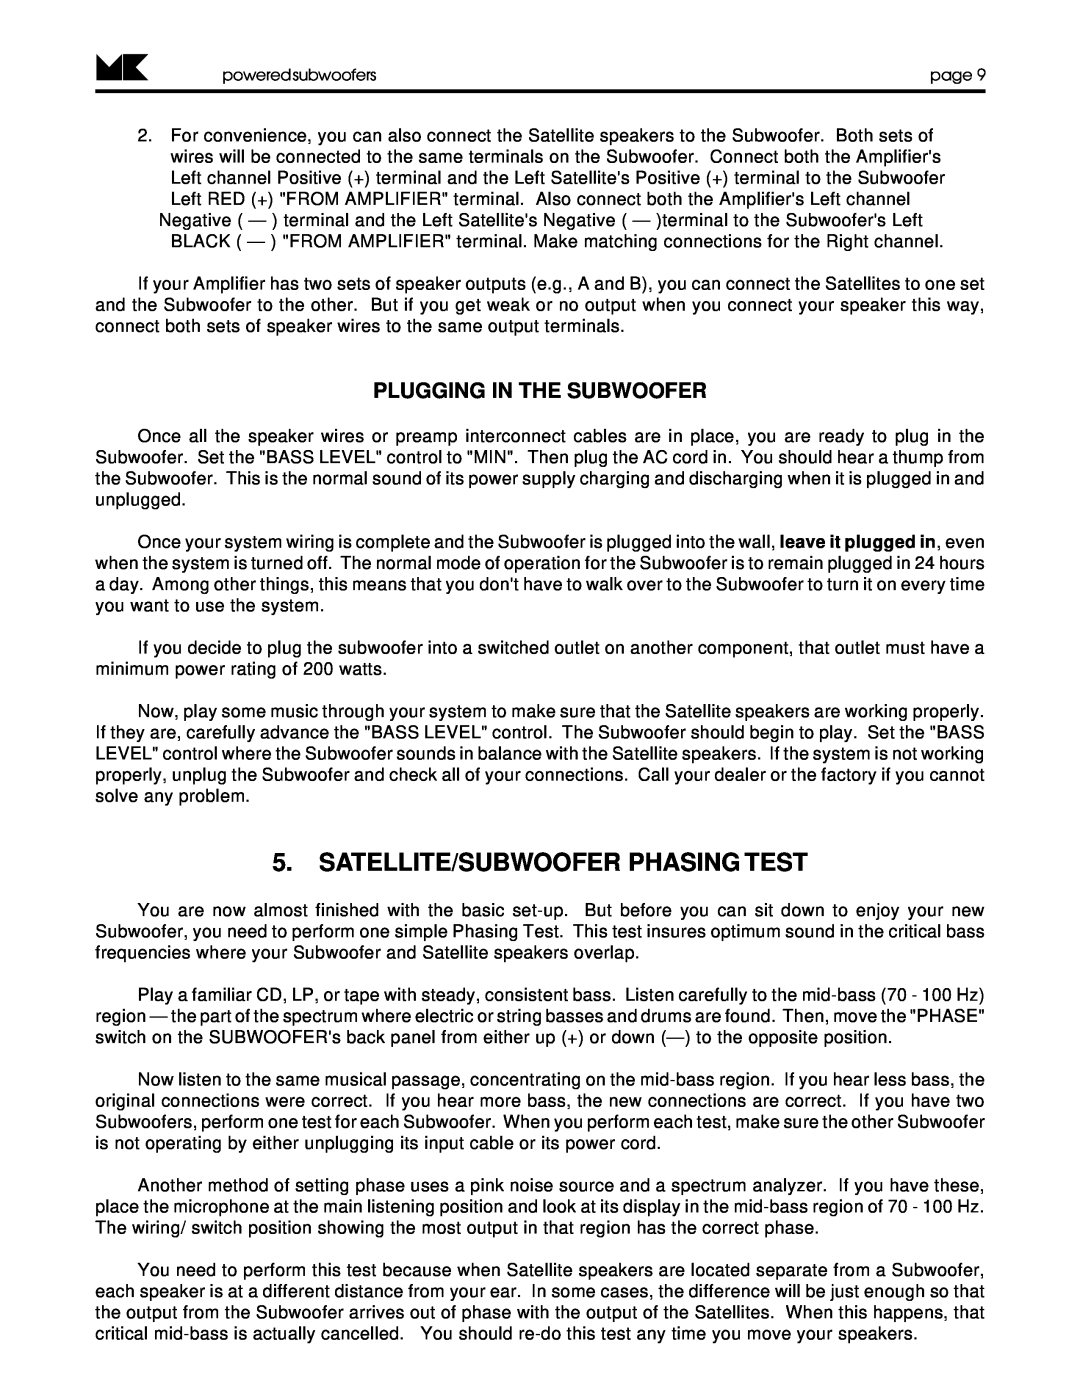 MK Sound K-10, K-9, K-11 operation manual Satellite/Subwoofer Phasing Test, Plugging In The Subwoofer 